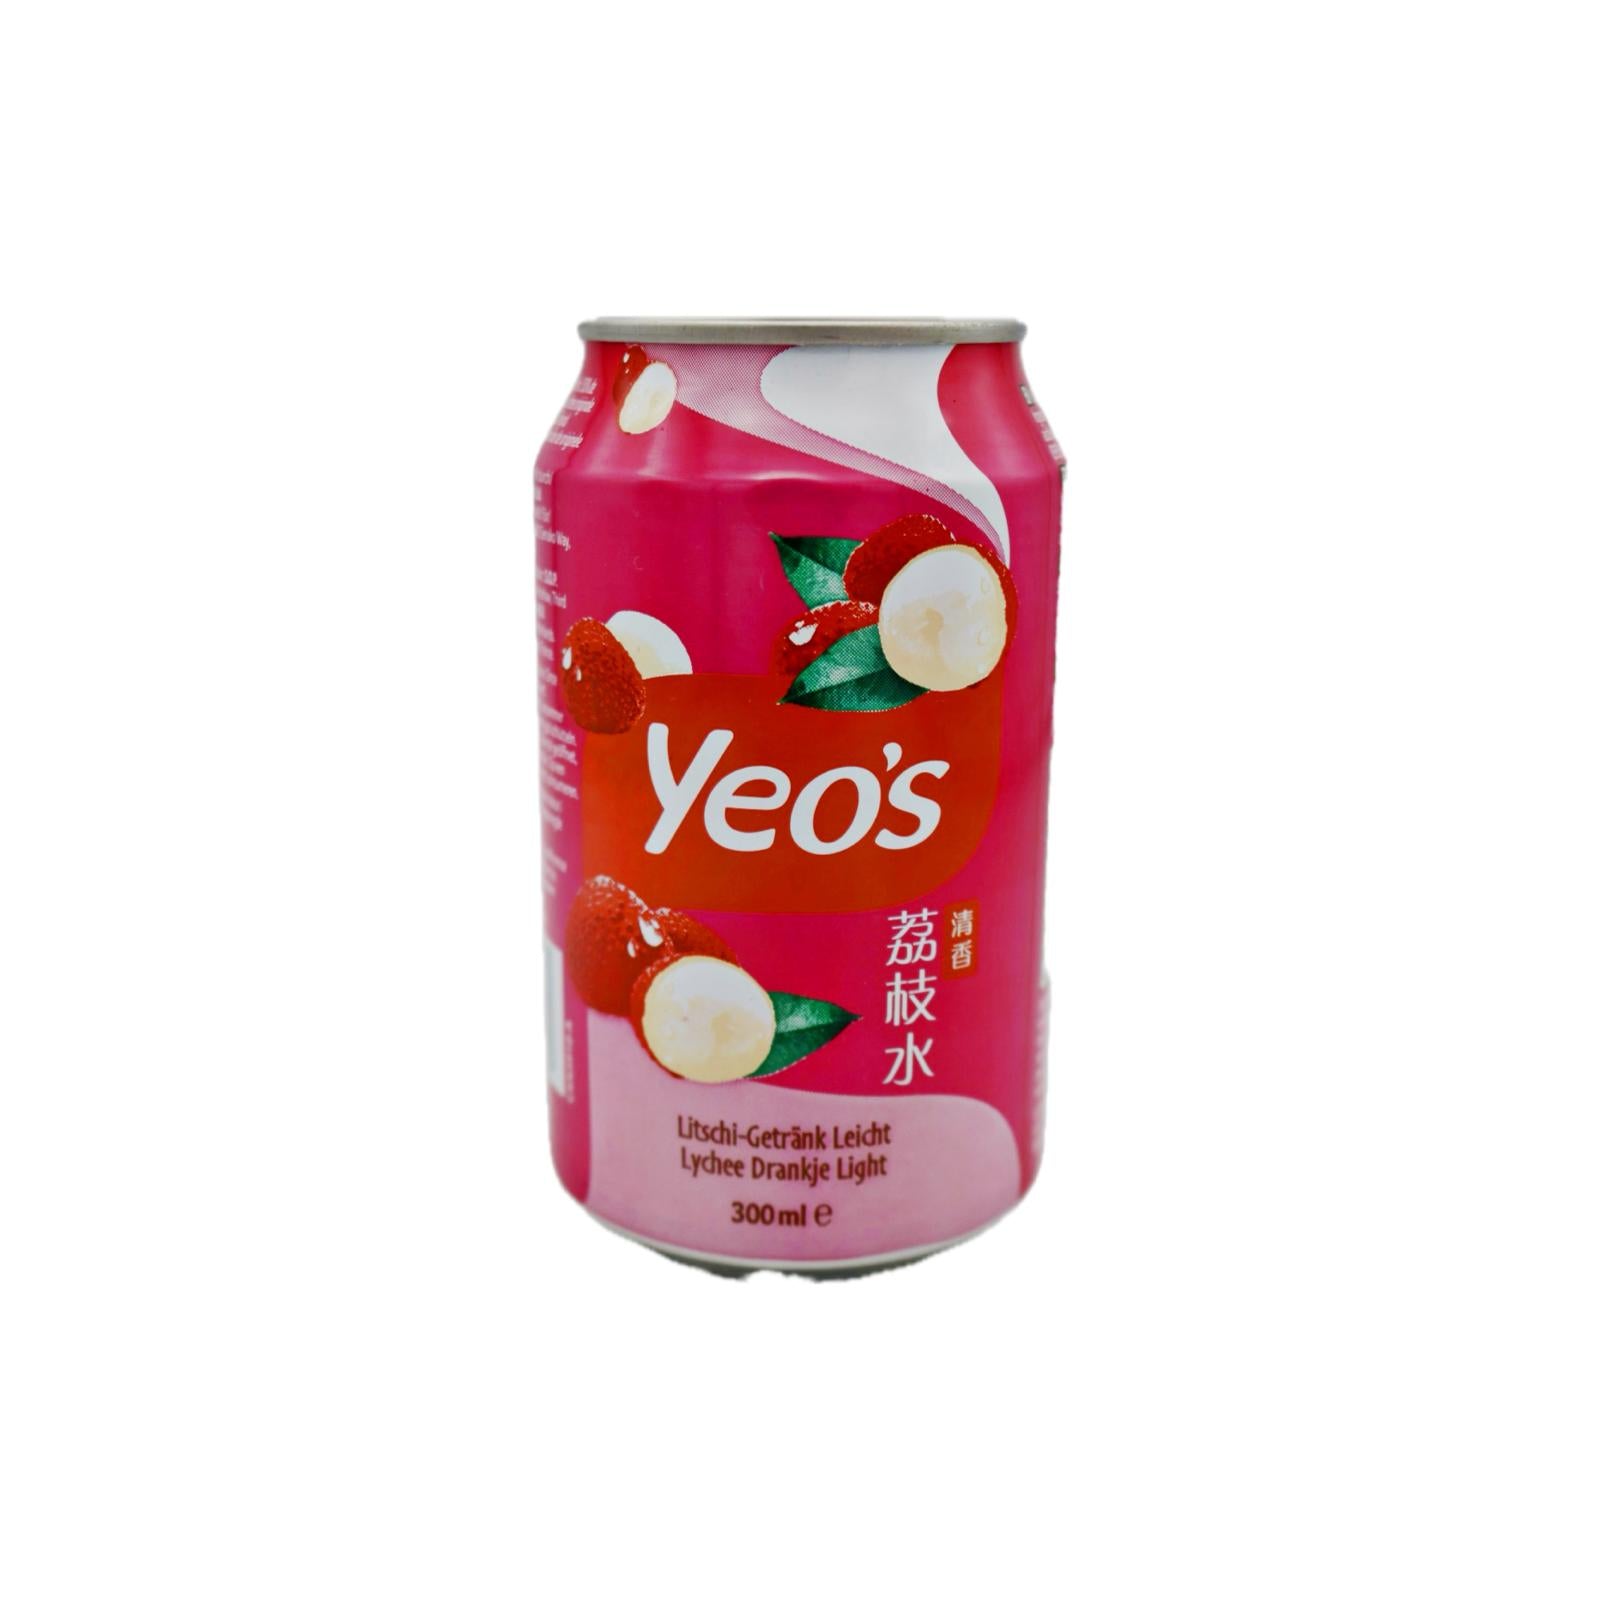 Yeo's Lychee Drink 300ml